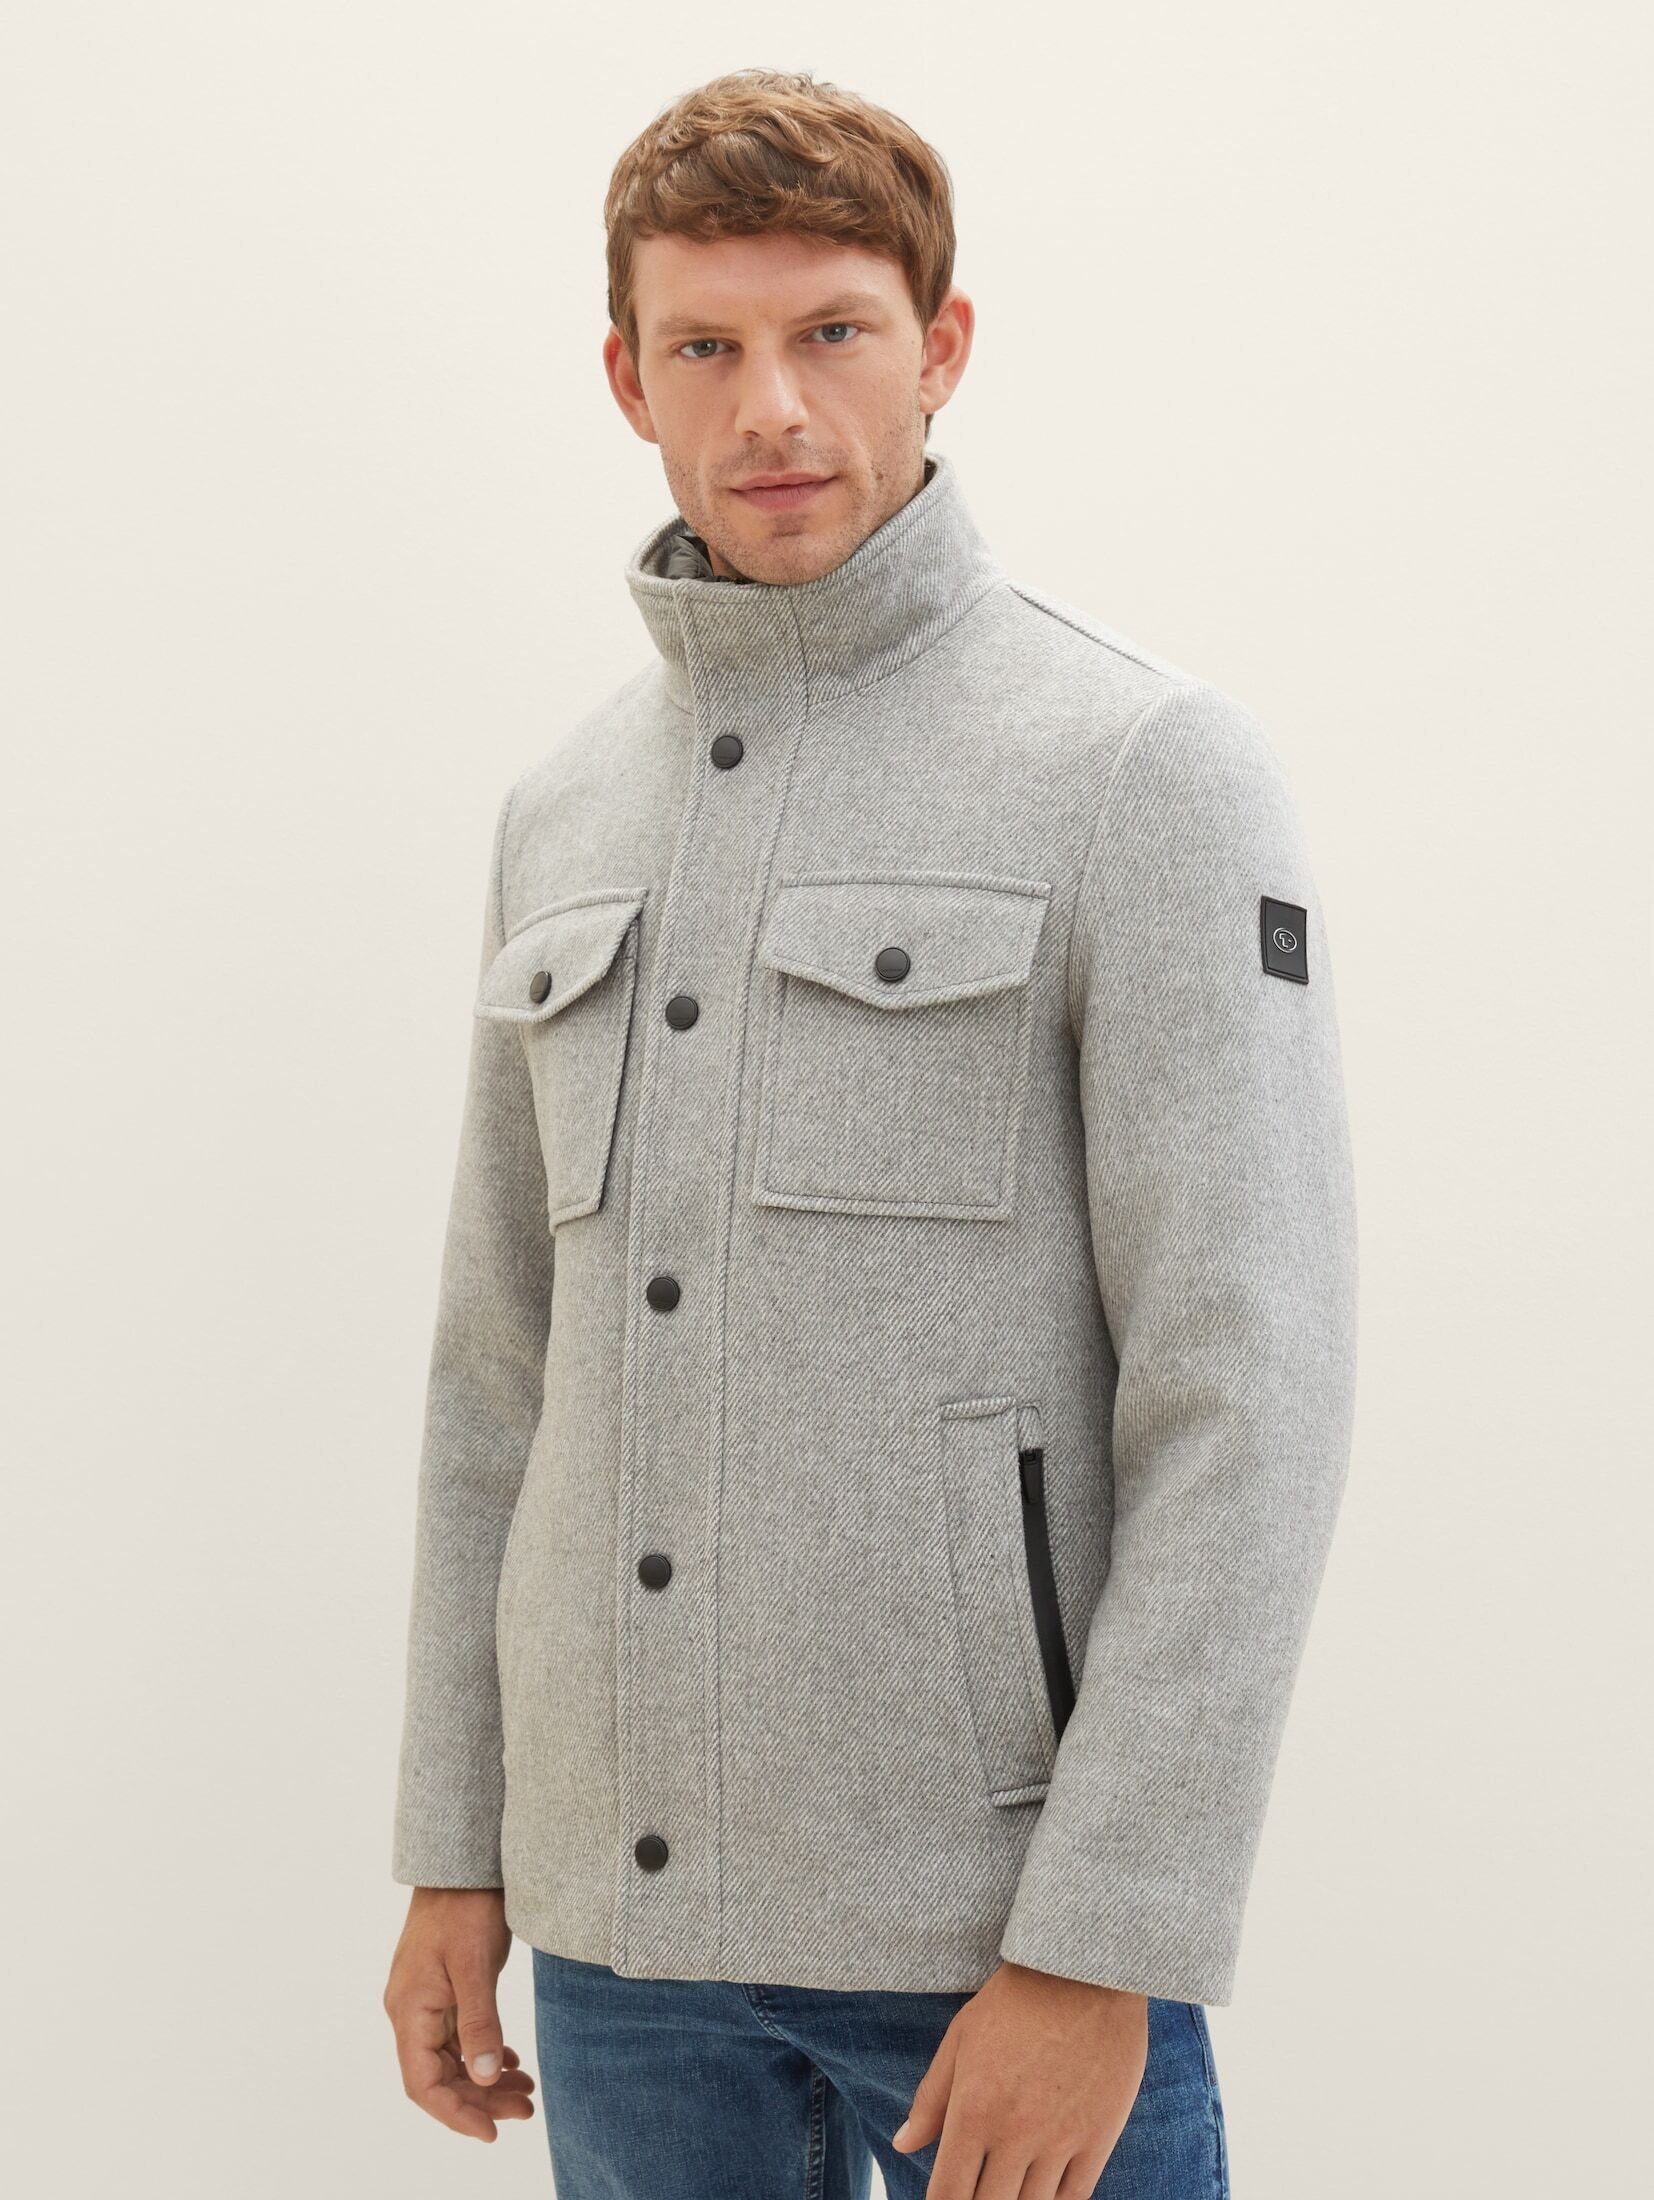 TOM TAILOR Kurzmantel 2-in-1 Jacke light stone grey wool twill